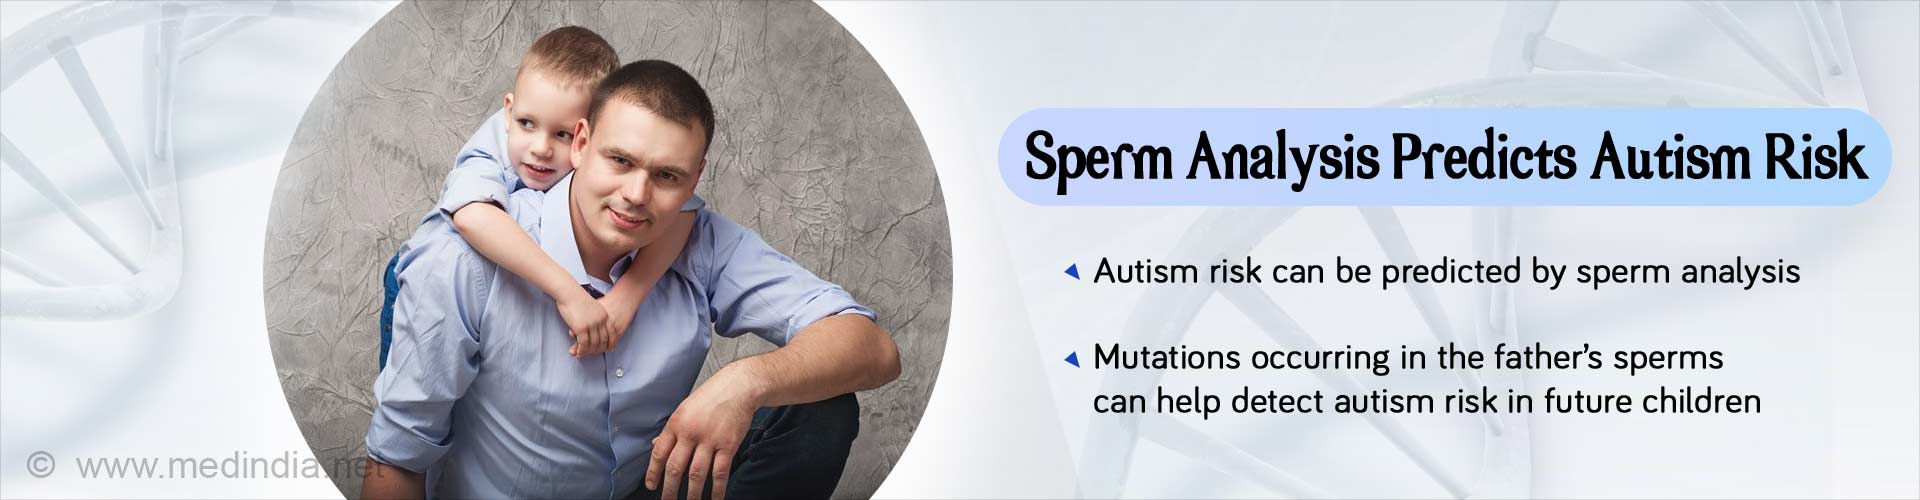 Sperm Analysis Predicts Autism Risk